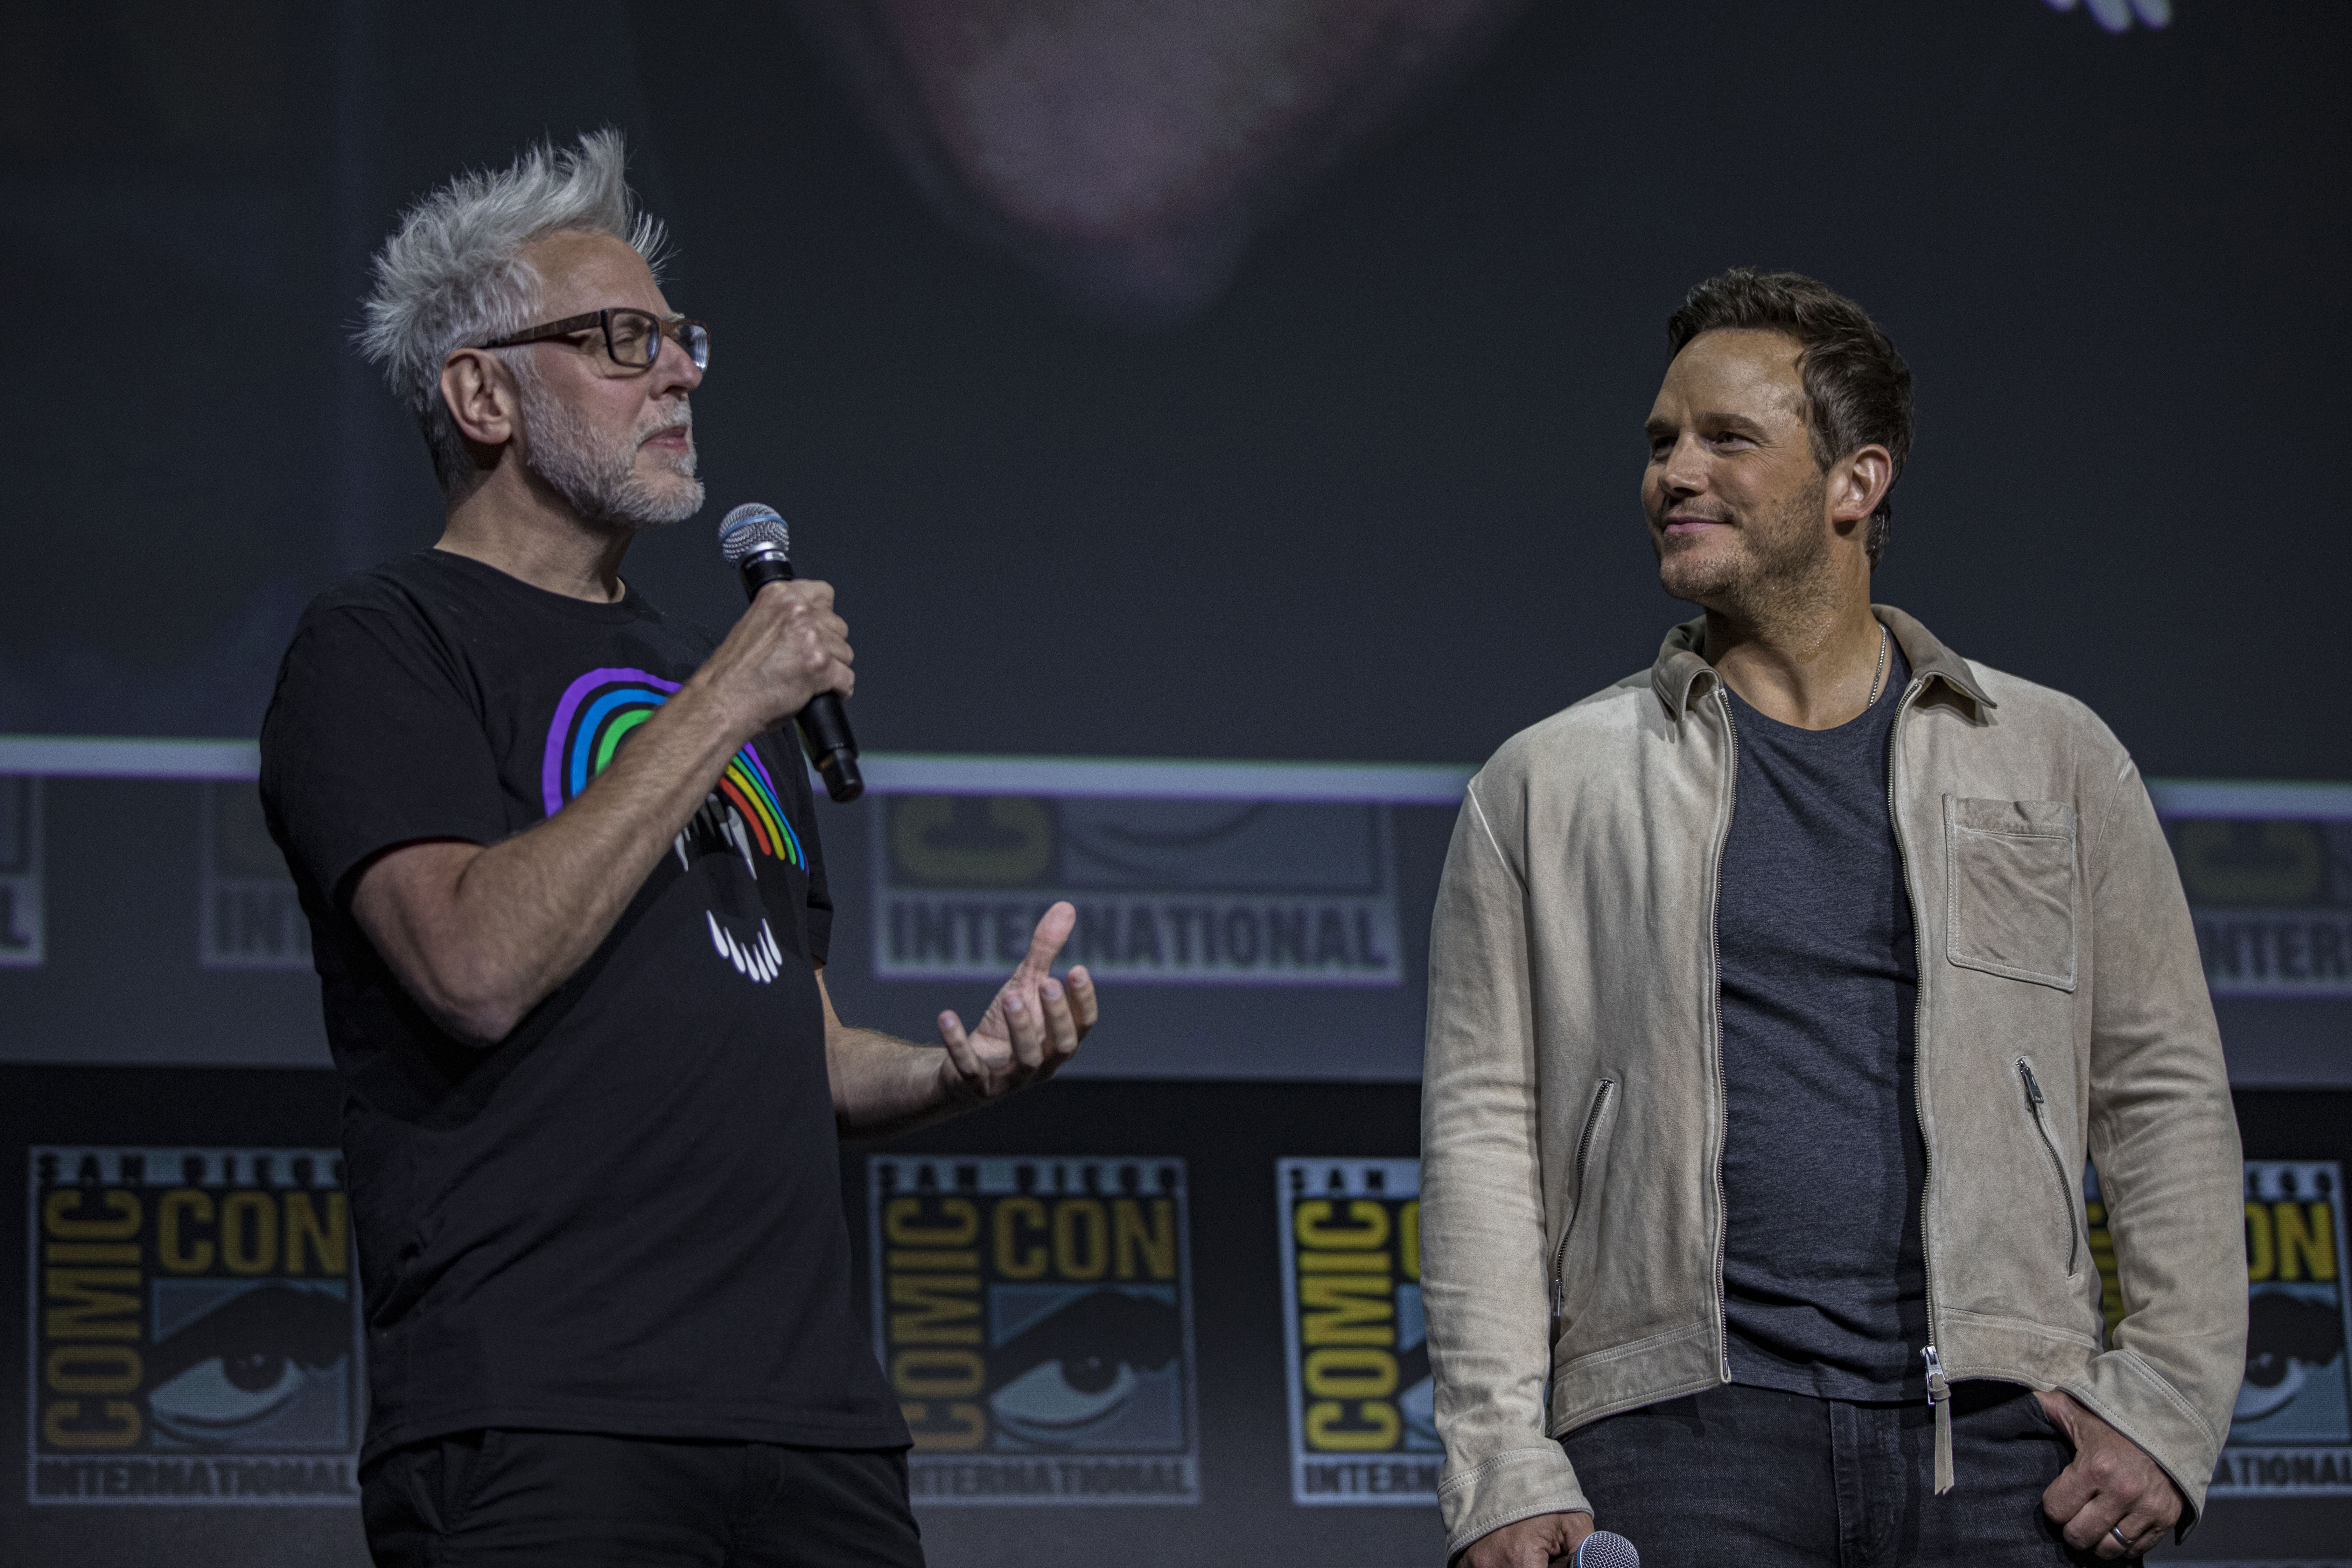 James Gunn, who teased the runtime for 'Guardians of the Galaxy 3,' speaks onstage next to Chris Pratt. Gunn wears a black shirt with a rainbow on it. Pratt wears a tan jacket over a dark blue shirt.